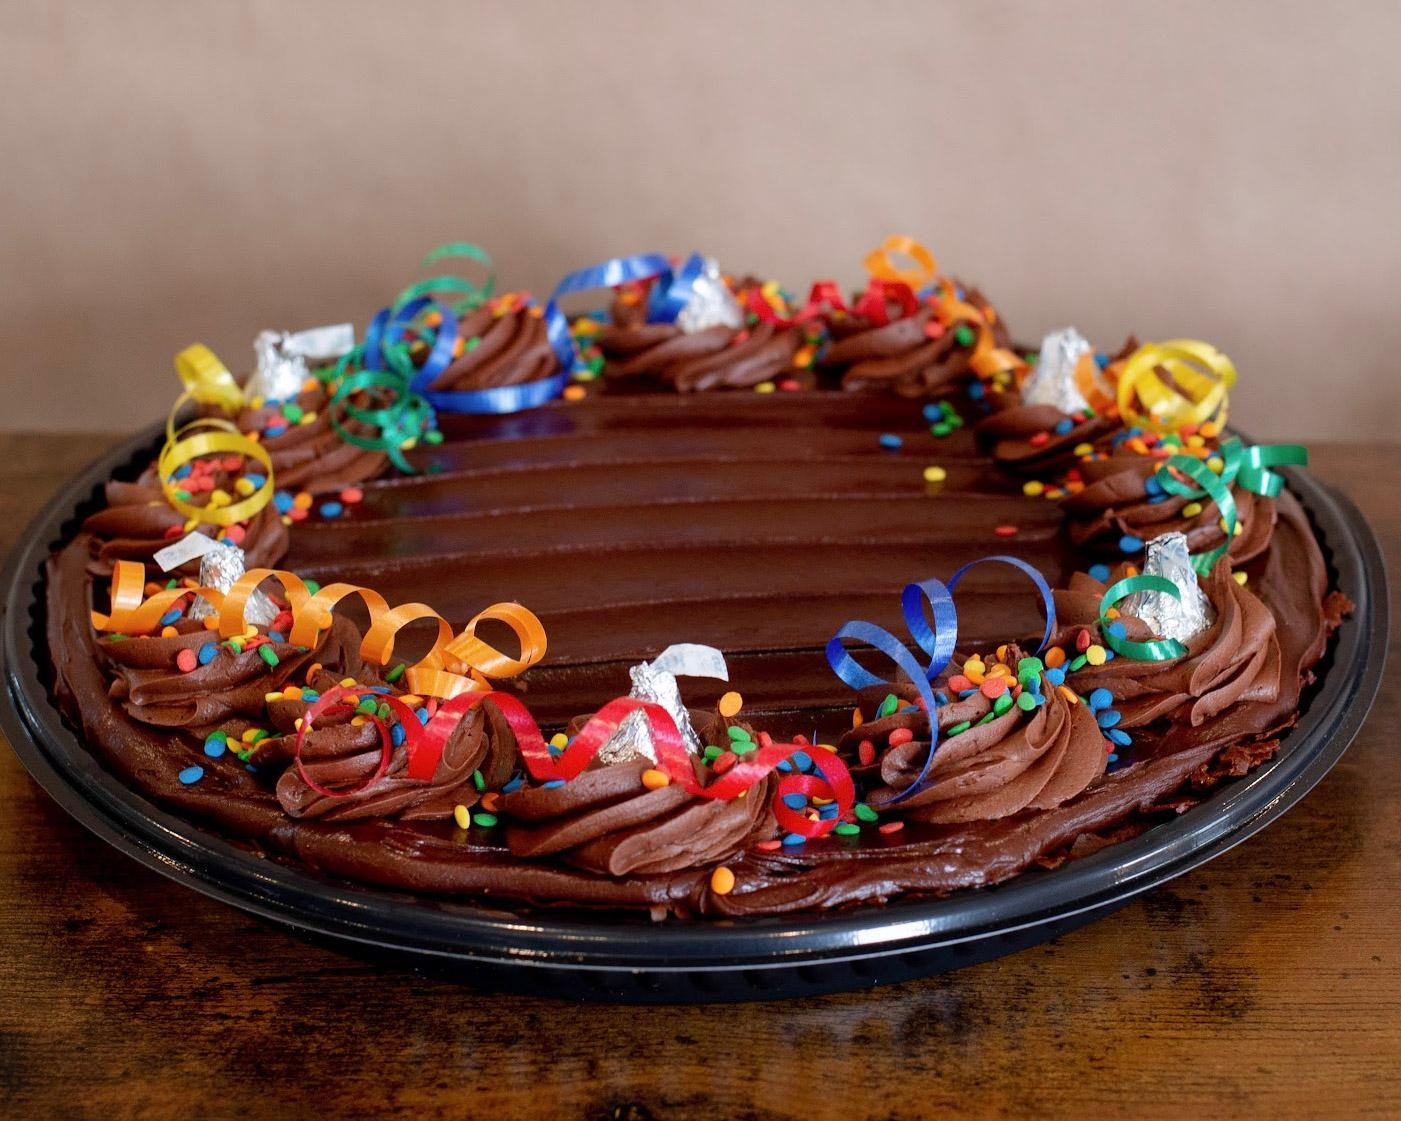 Brownie Cake - 12"